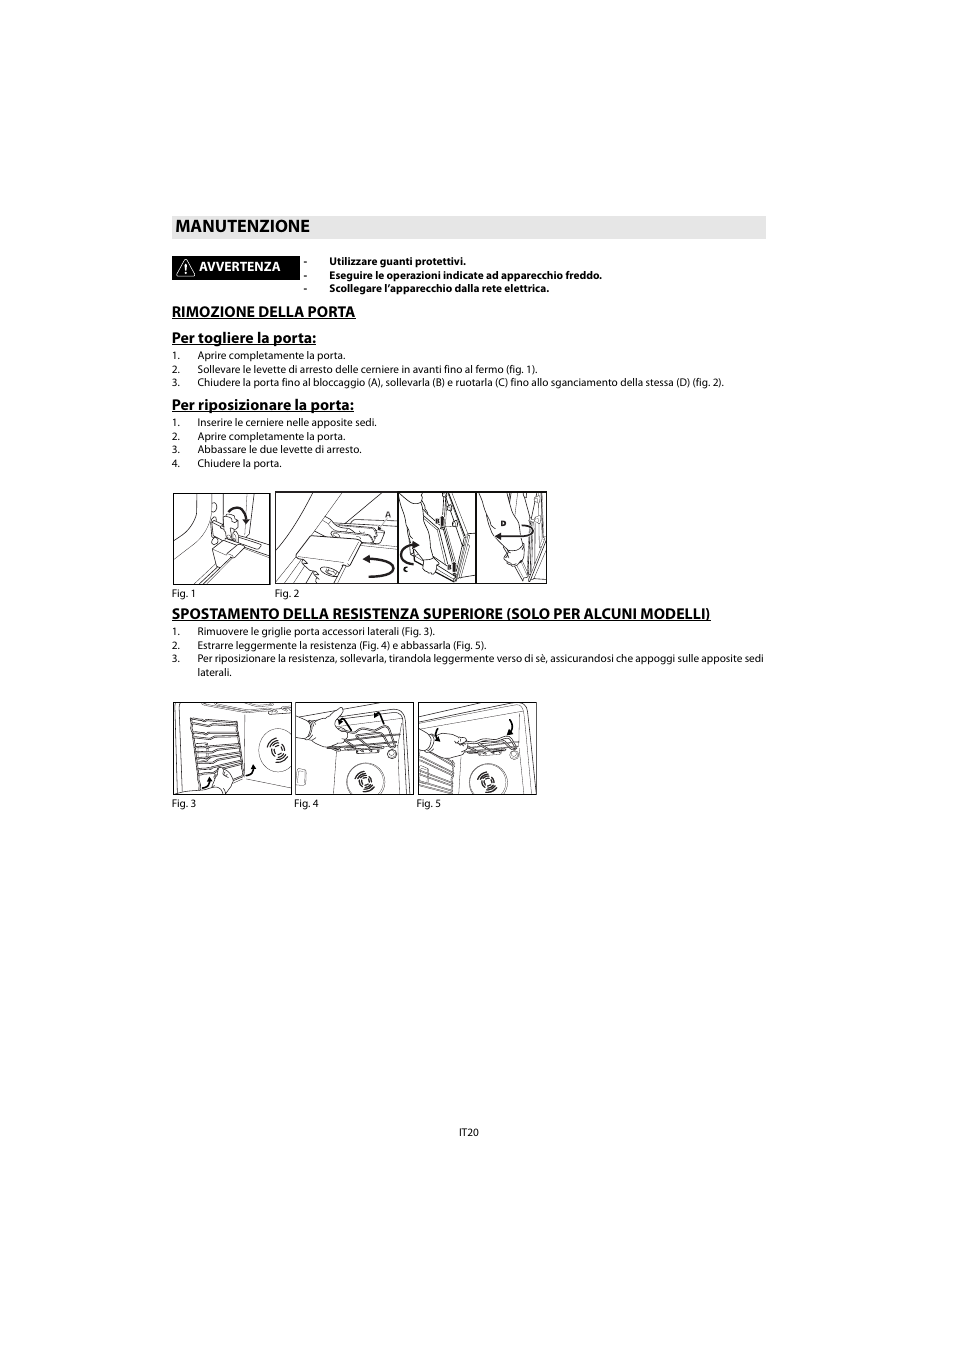 Manutenzione | Whirlpool AKZ 218-IX Manuale d'uso | Pagina 4 / 16